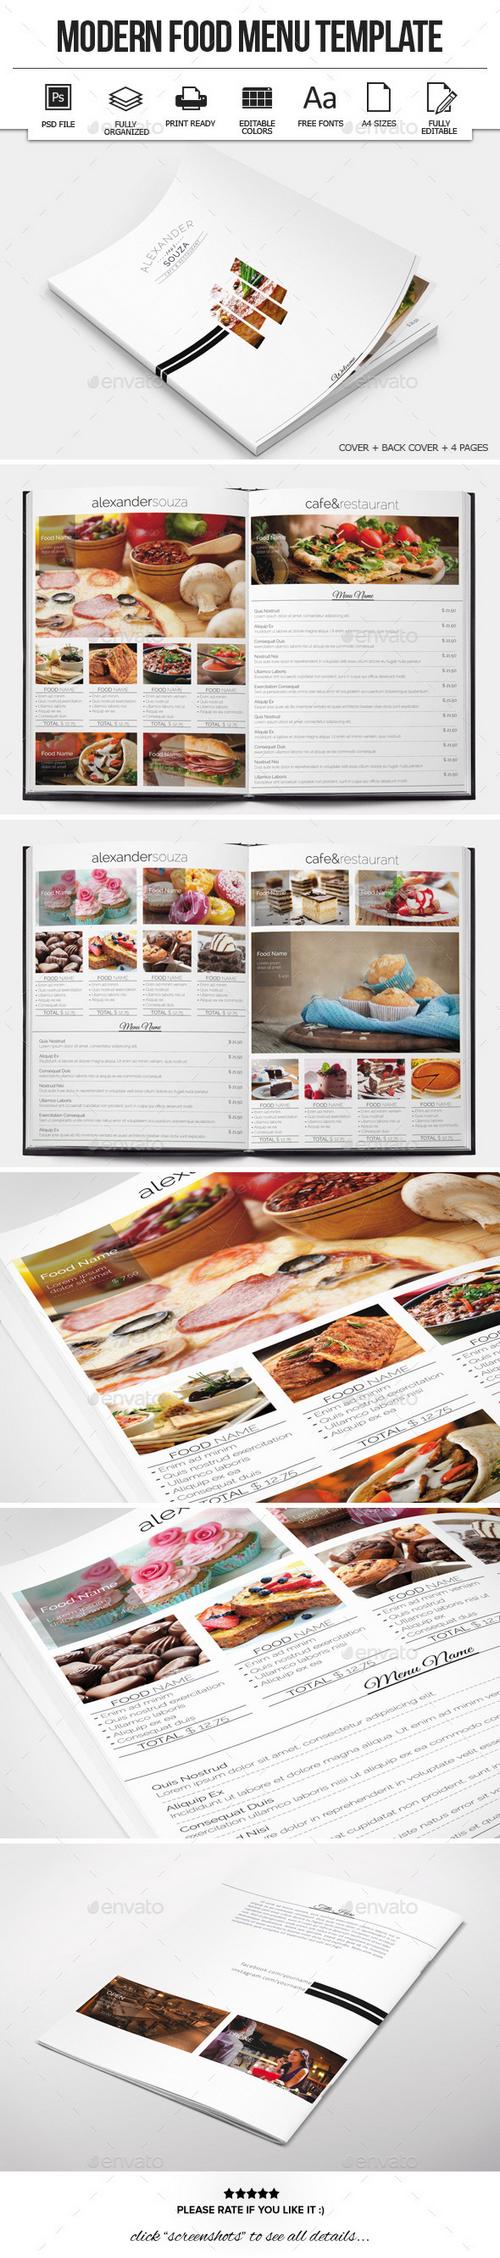 Graphicriver - Modern Food Menu Design 10477515